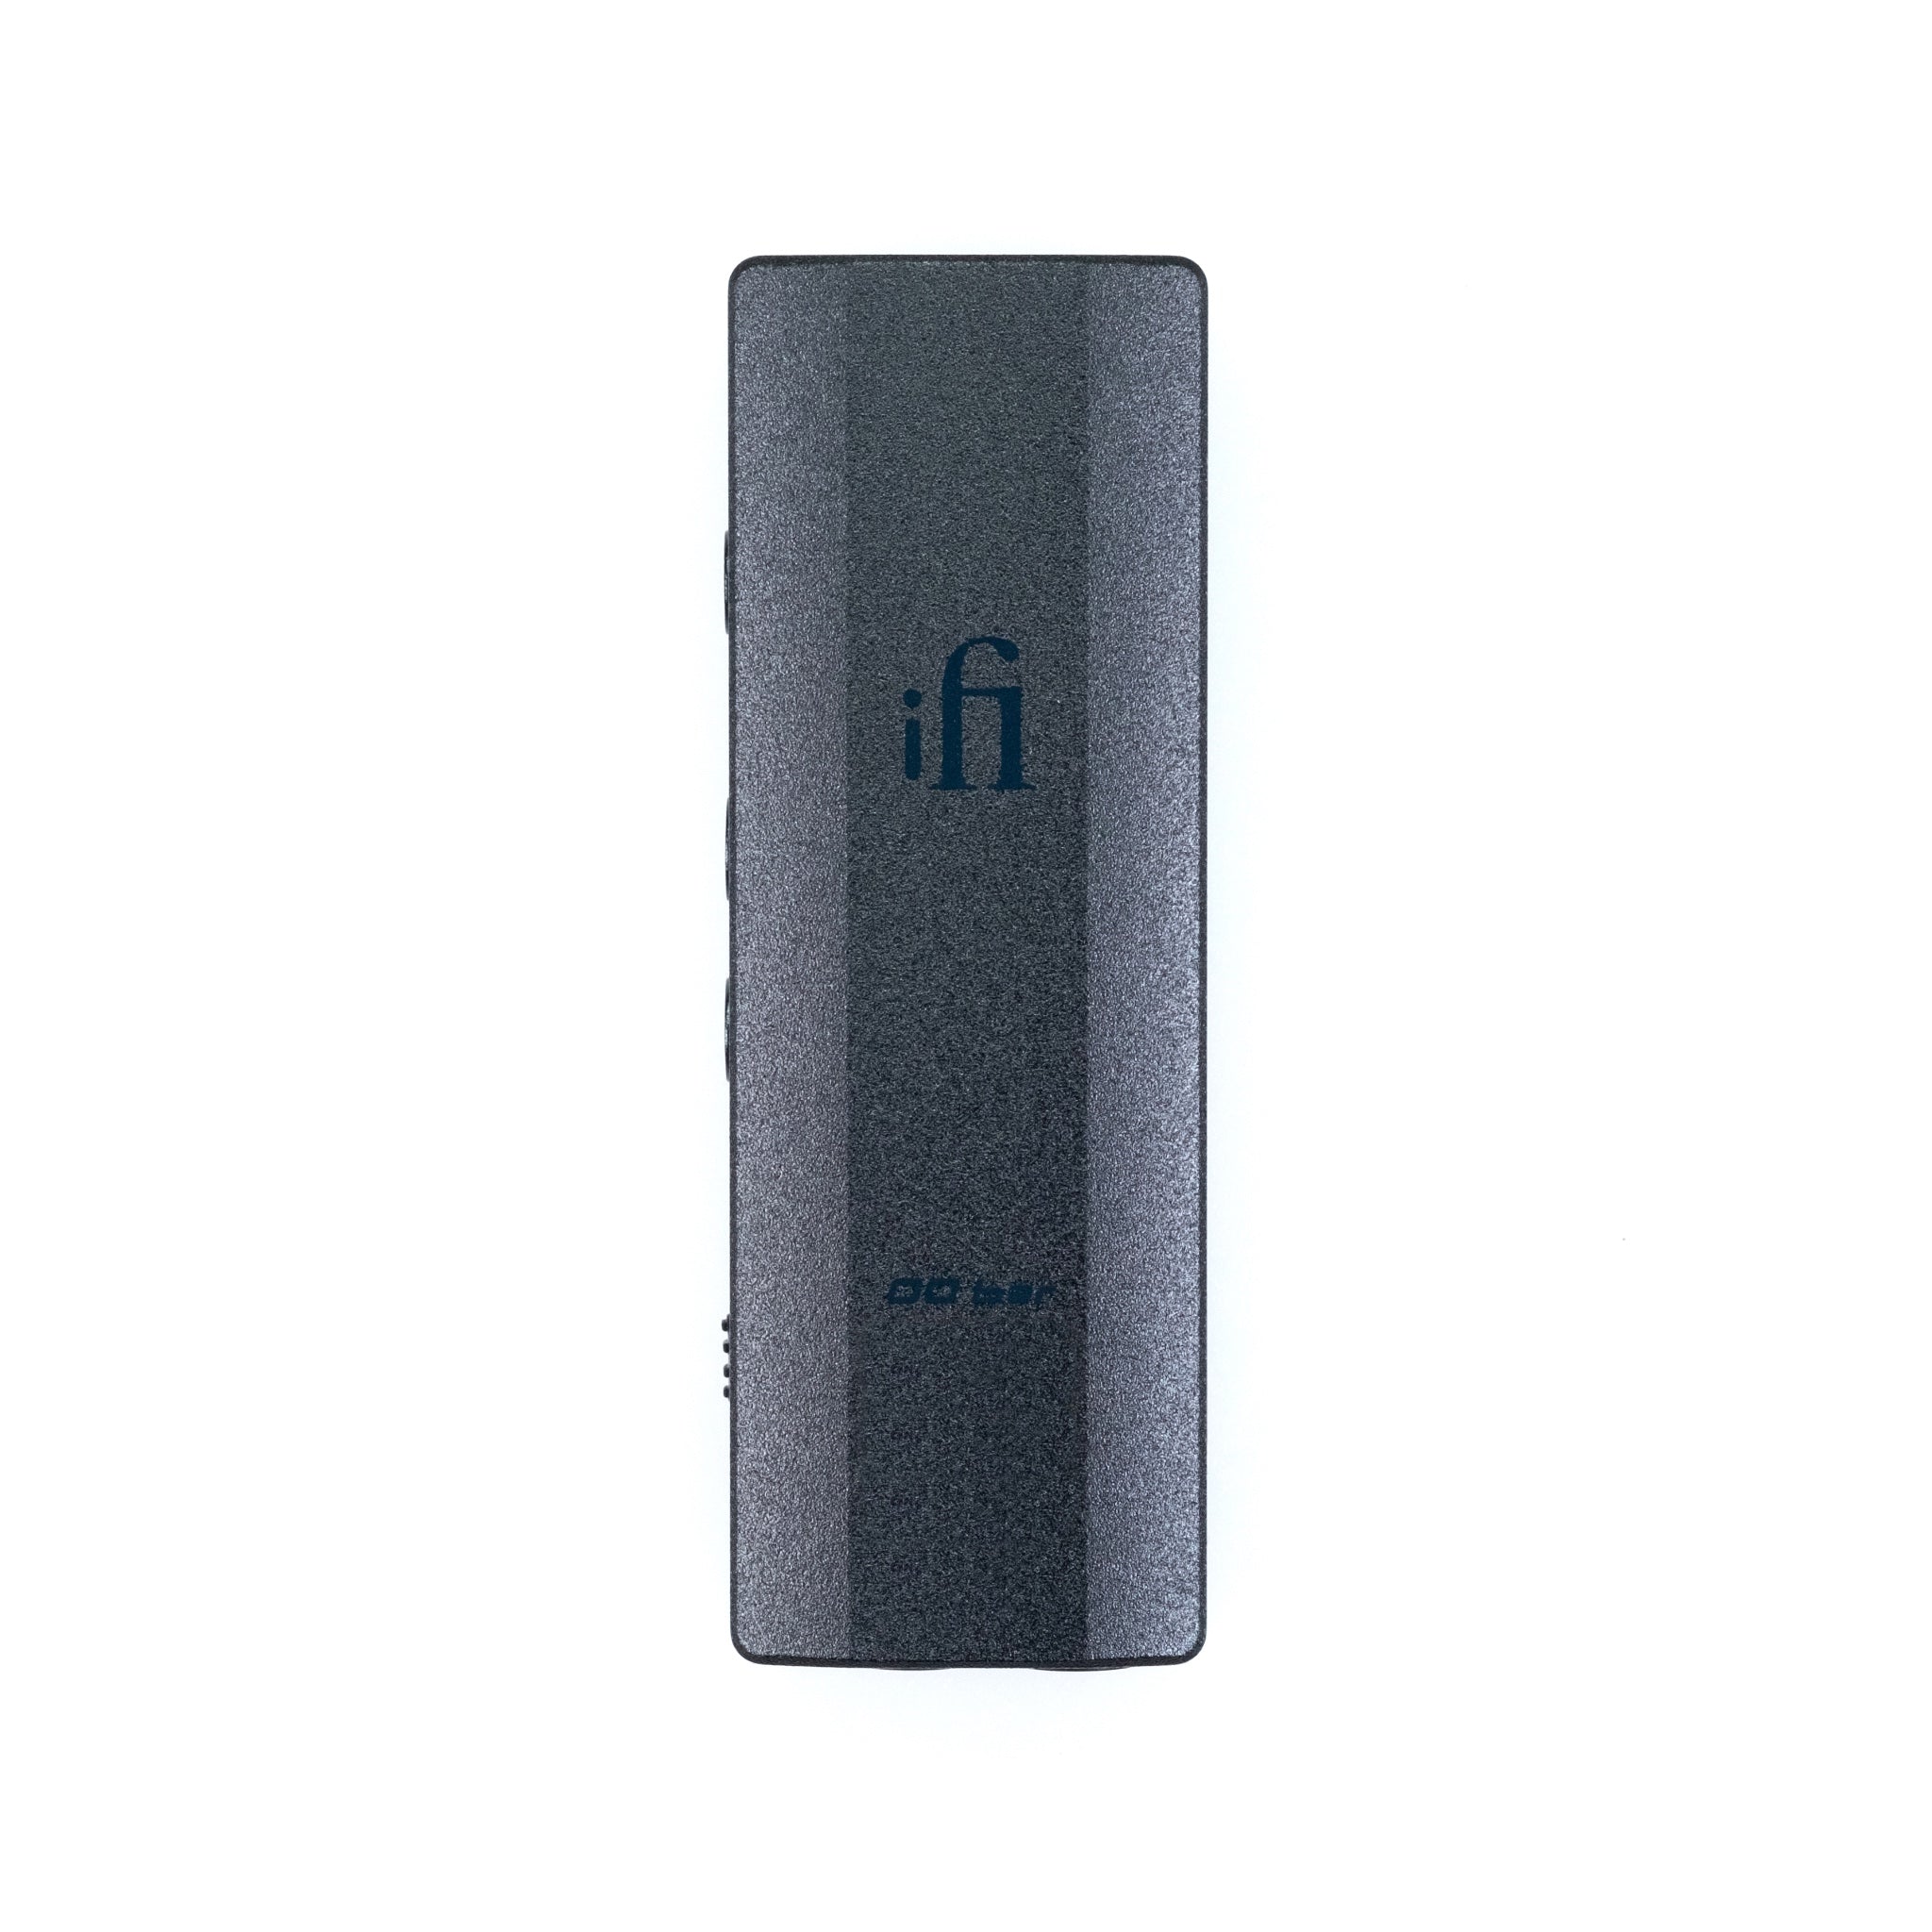 iFi GO bar | Portable DAC and Amp